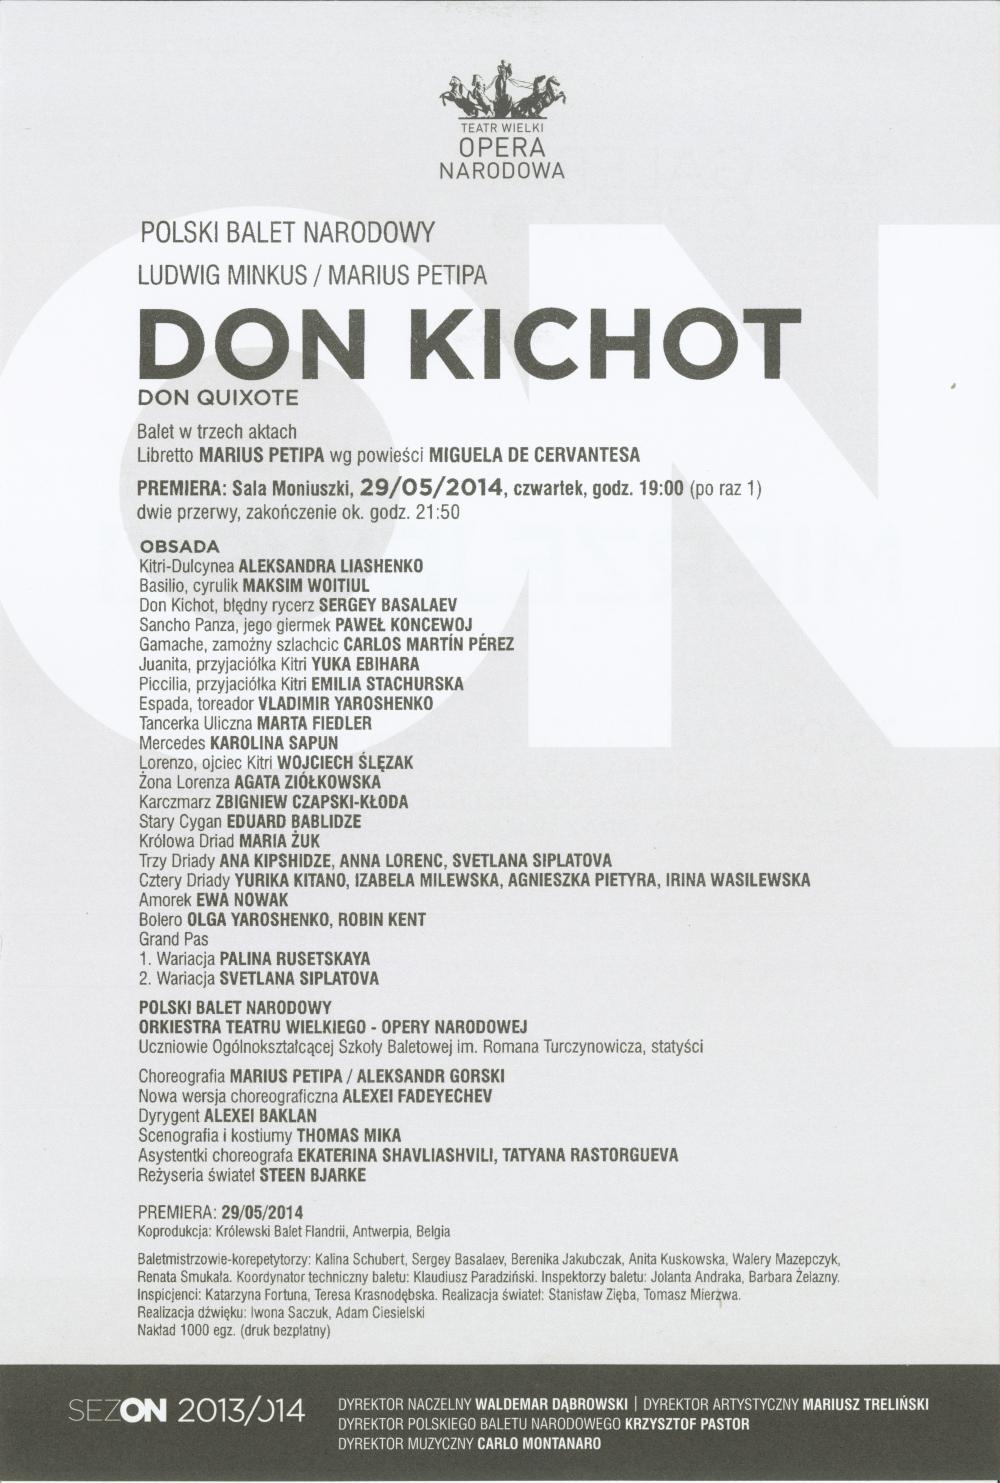 Wkładka obsadowa "Don Kichot" Ludwig Minkus / Marius Petipa premiera 2014-05-29